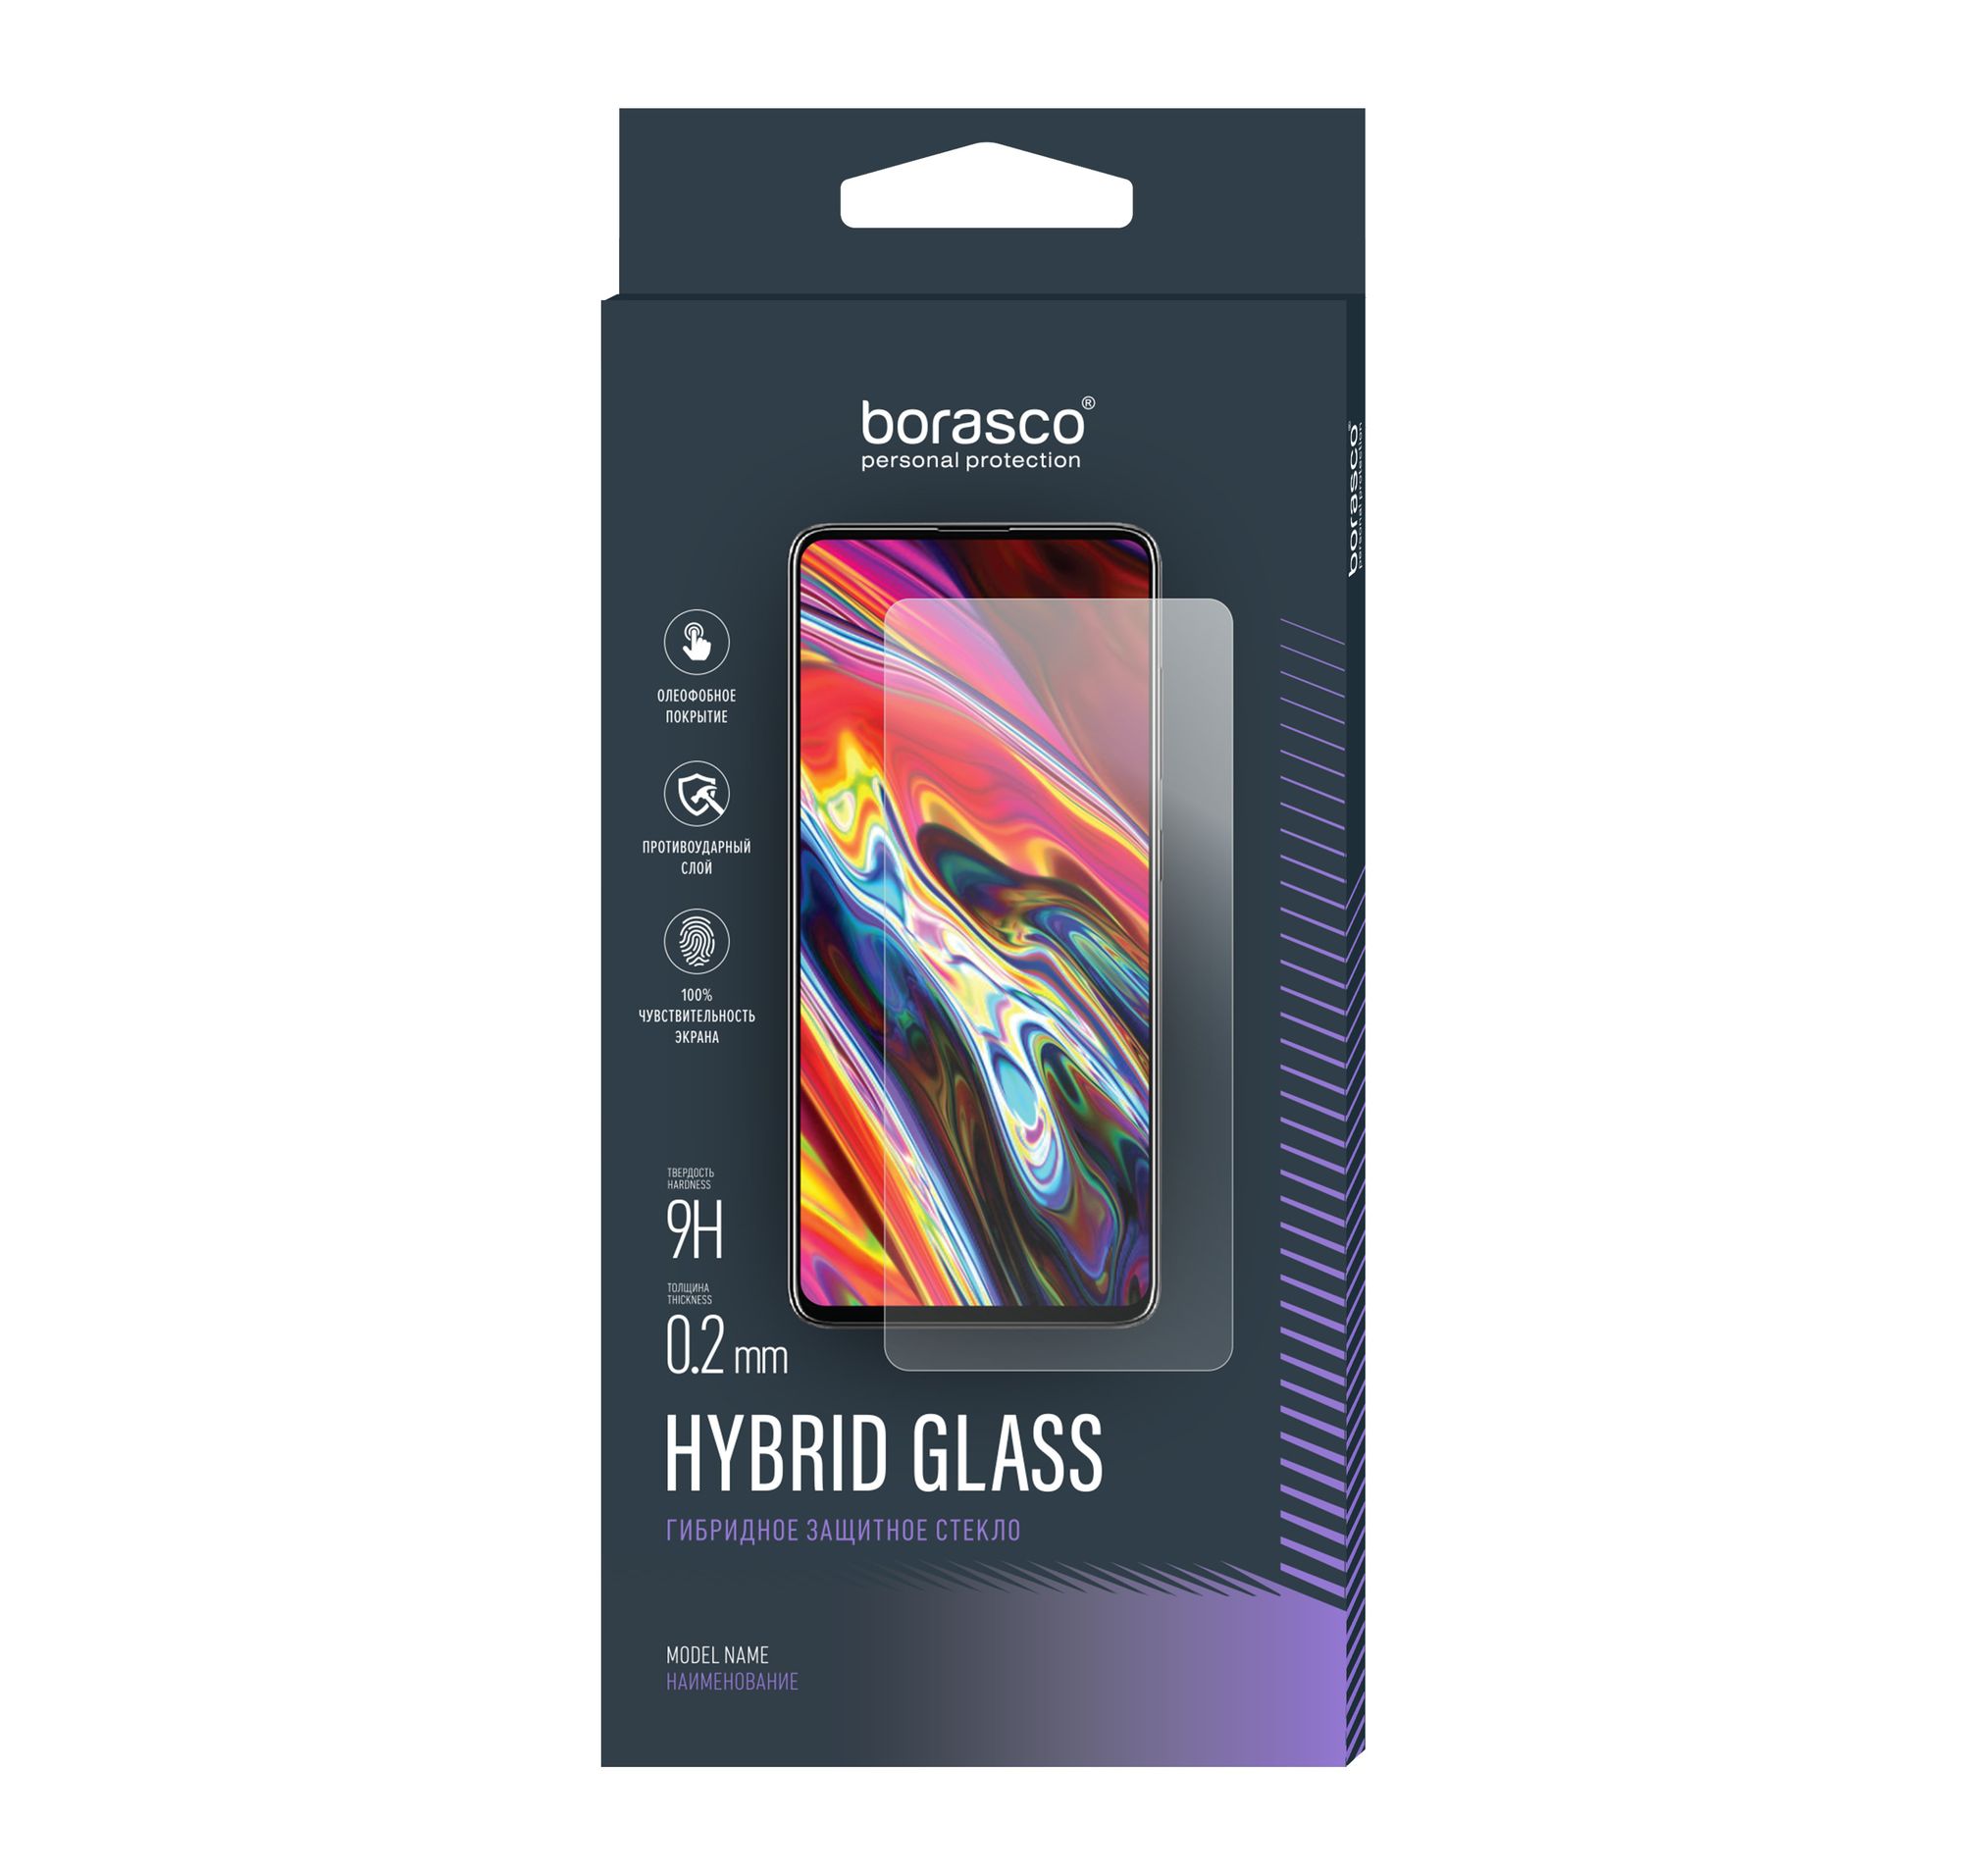 Стекло защитное Hybrid Glass VSP 0,26 мм для Sony Xperia XZ Premium Dual защитное стекло для sony g8141 g8142 xz premium xz premium dual